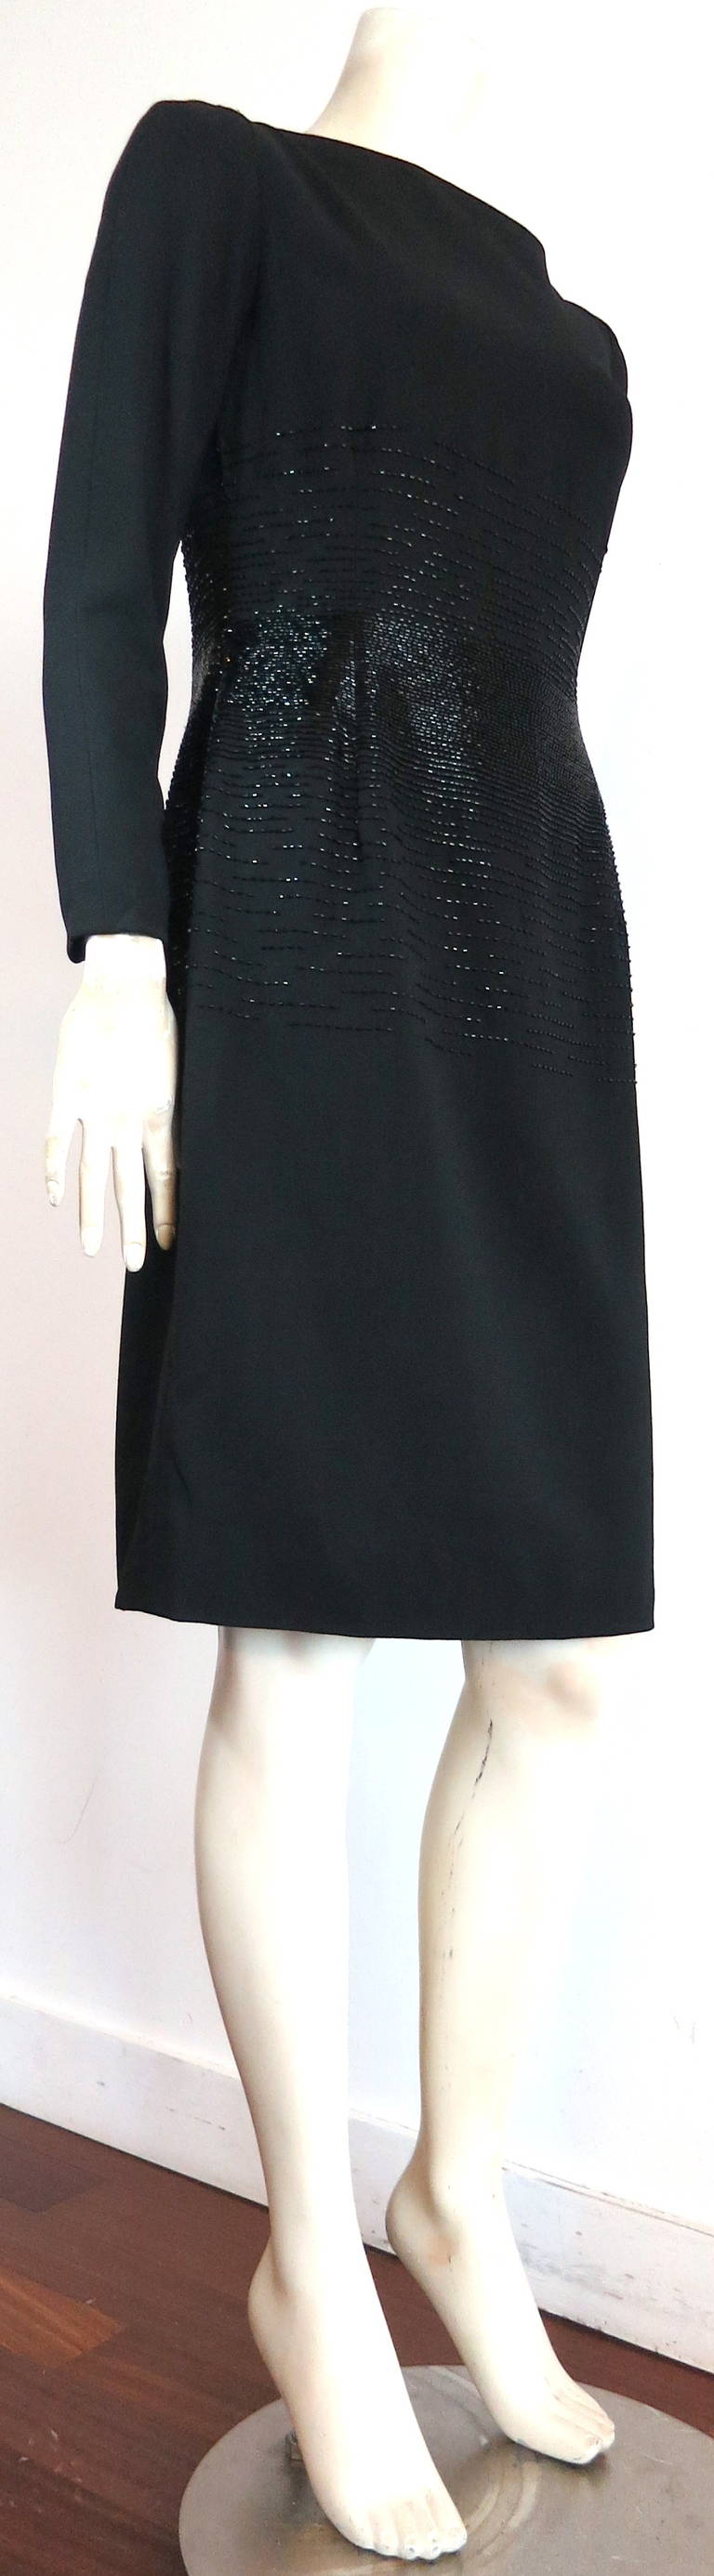 Black 1990's OSCAR DE LA RENTA Beaded cocktail dress For Sale